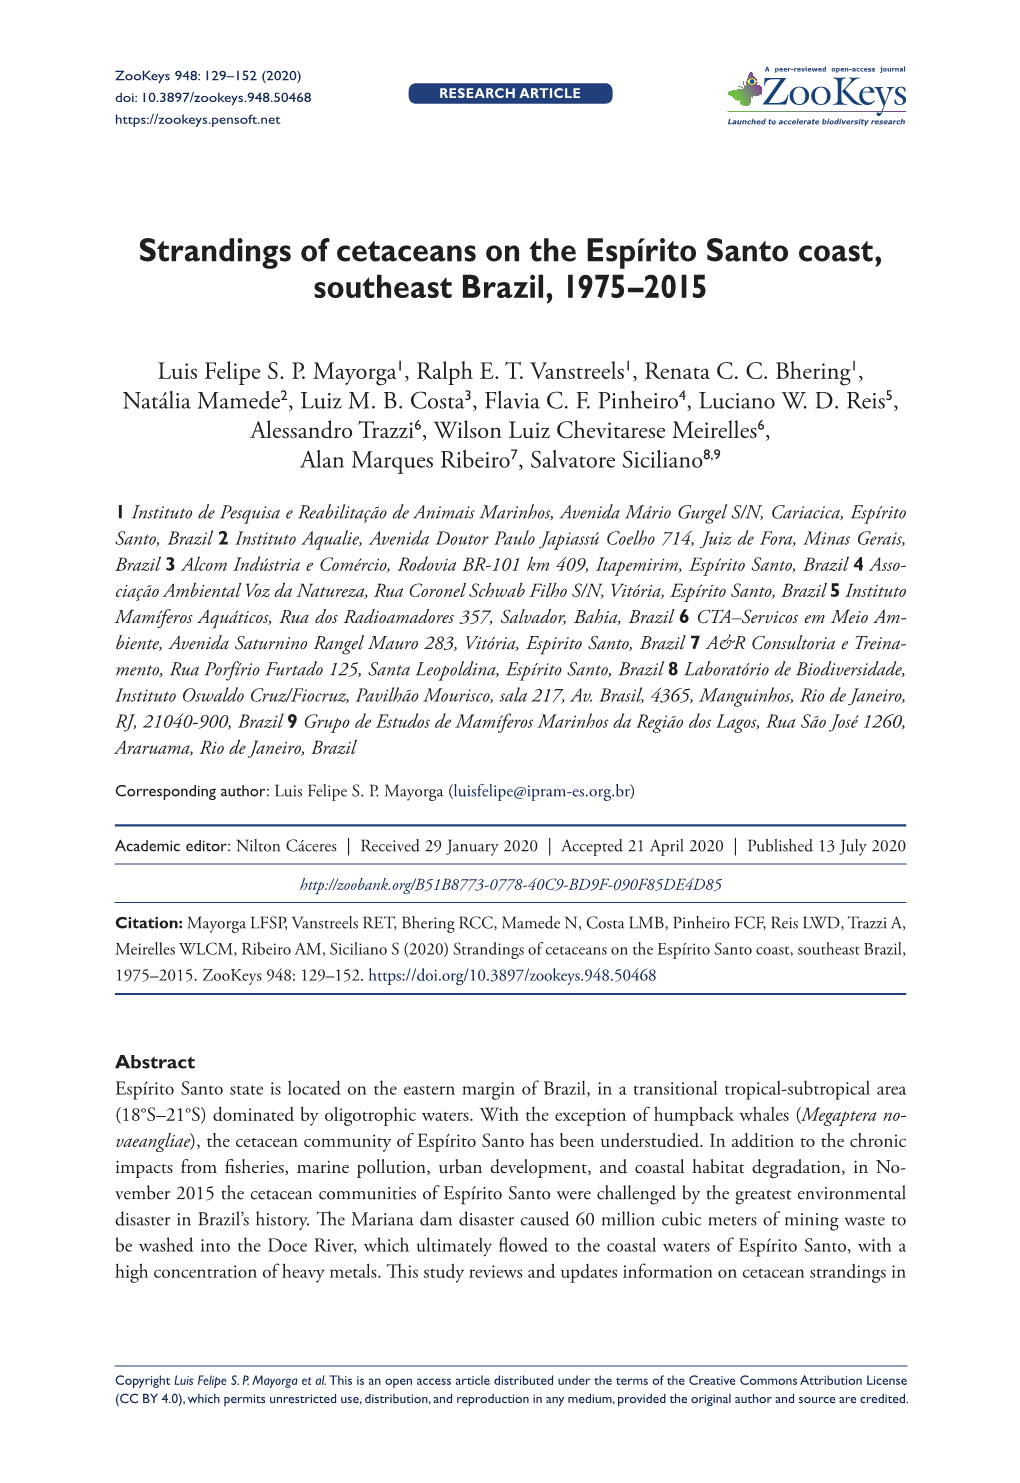 Strandings of Cetaceans on the Espírito Santo Coast, Southeast Brazil, 1975–2015